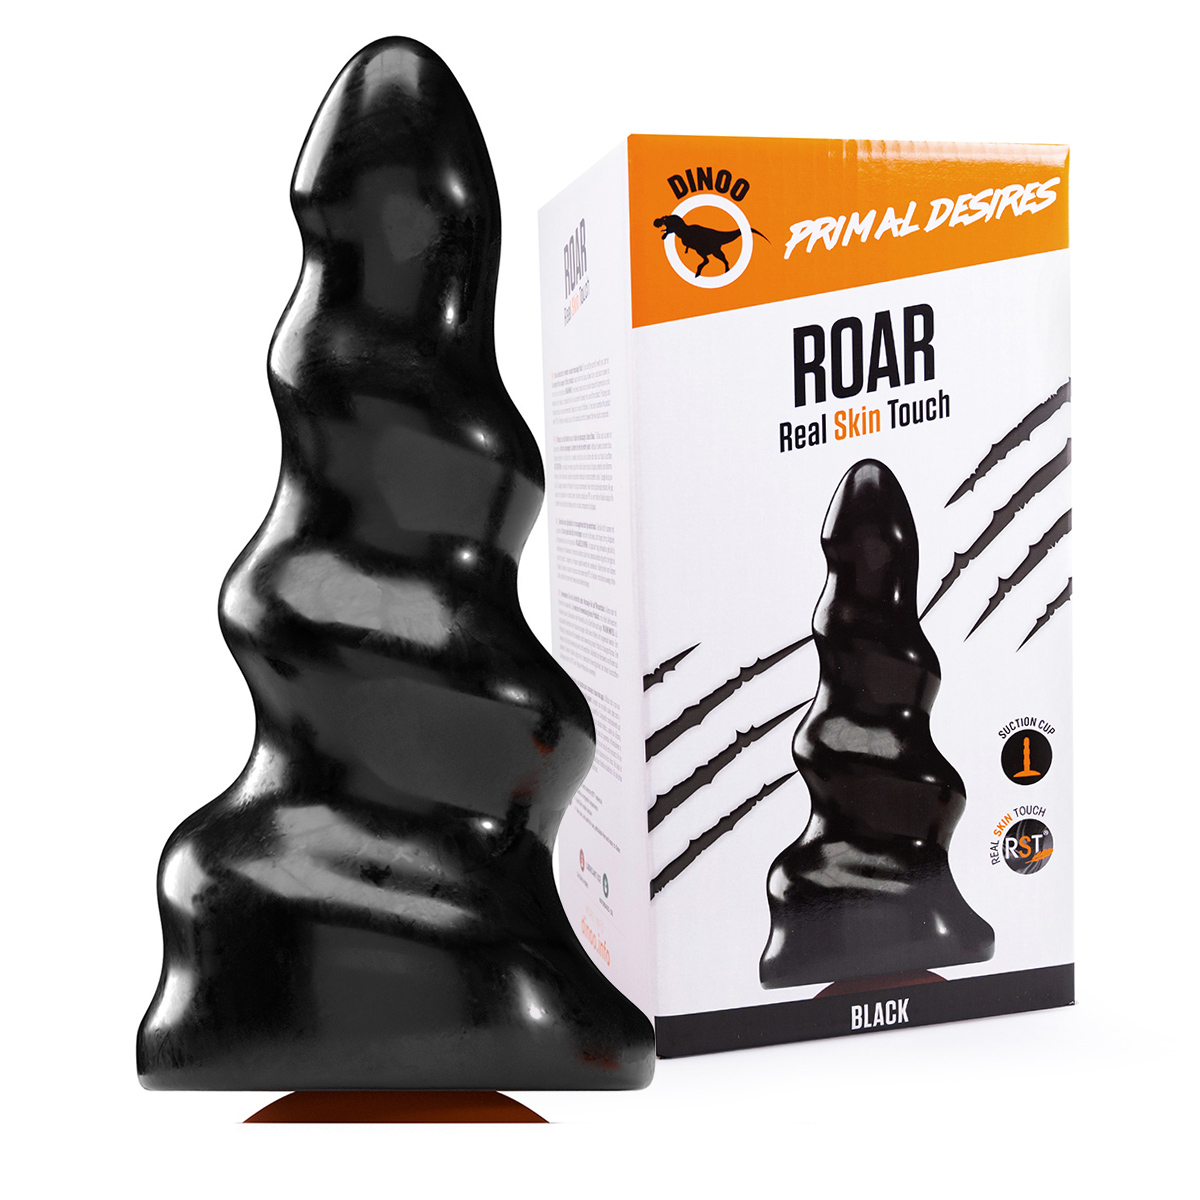 Dinoo Primal – Roar Black